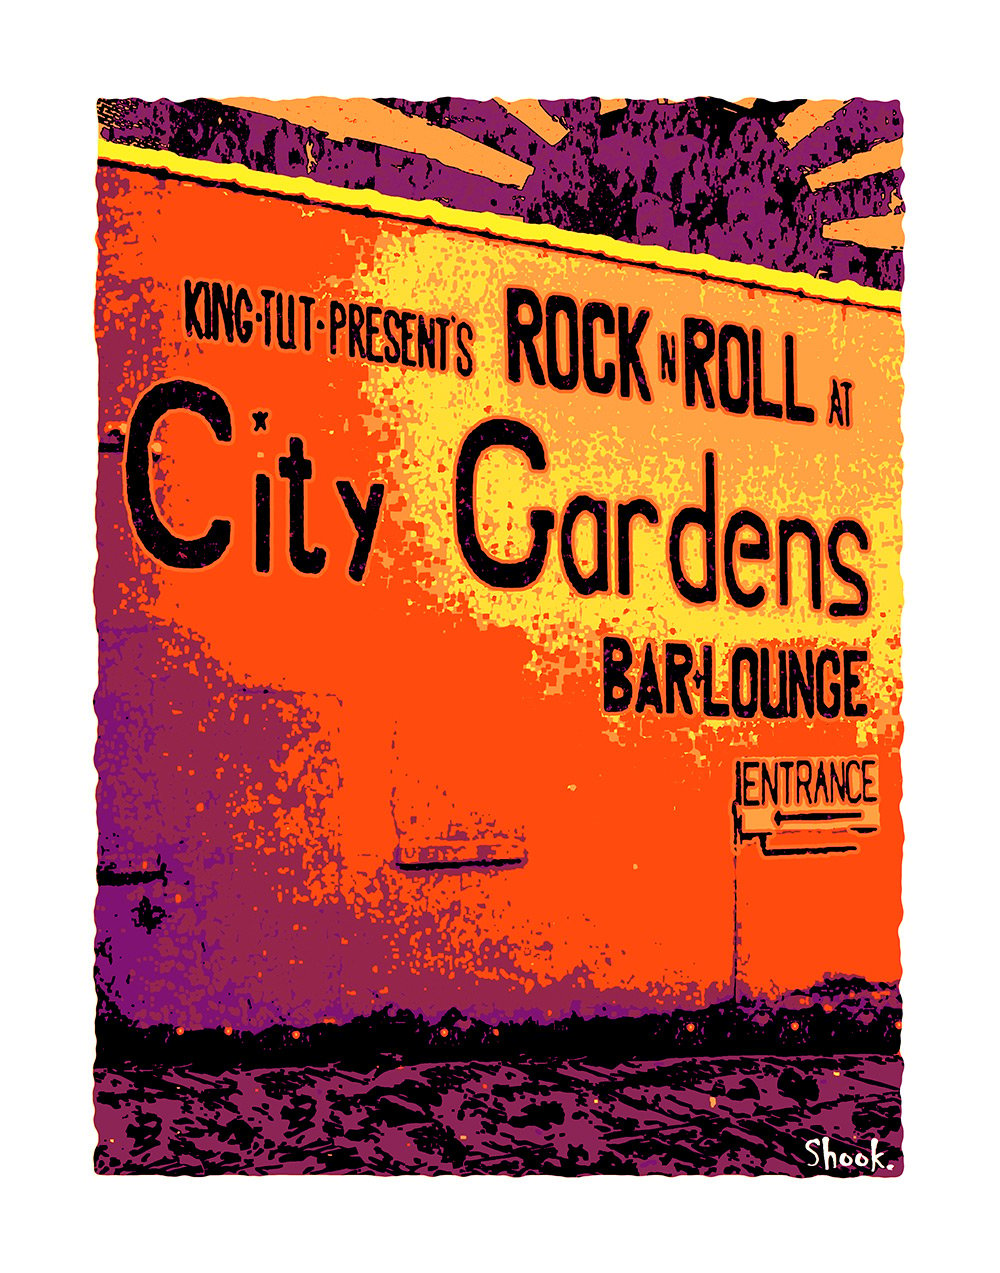 City Gardens Trenton NJ Art Print  (Multi-size options)